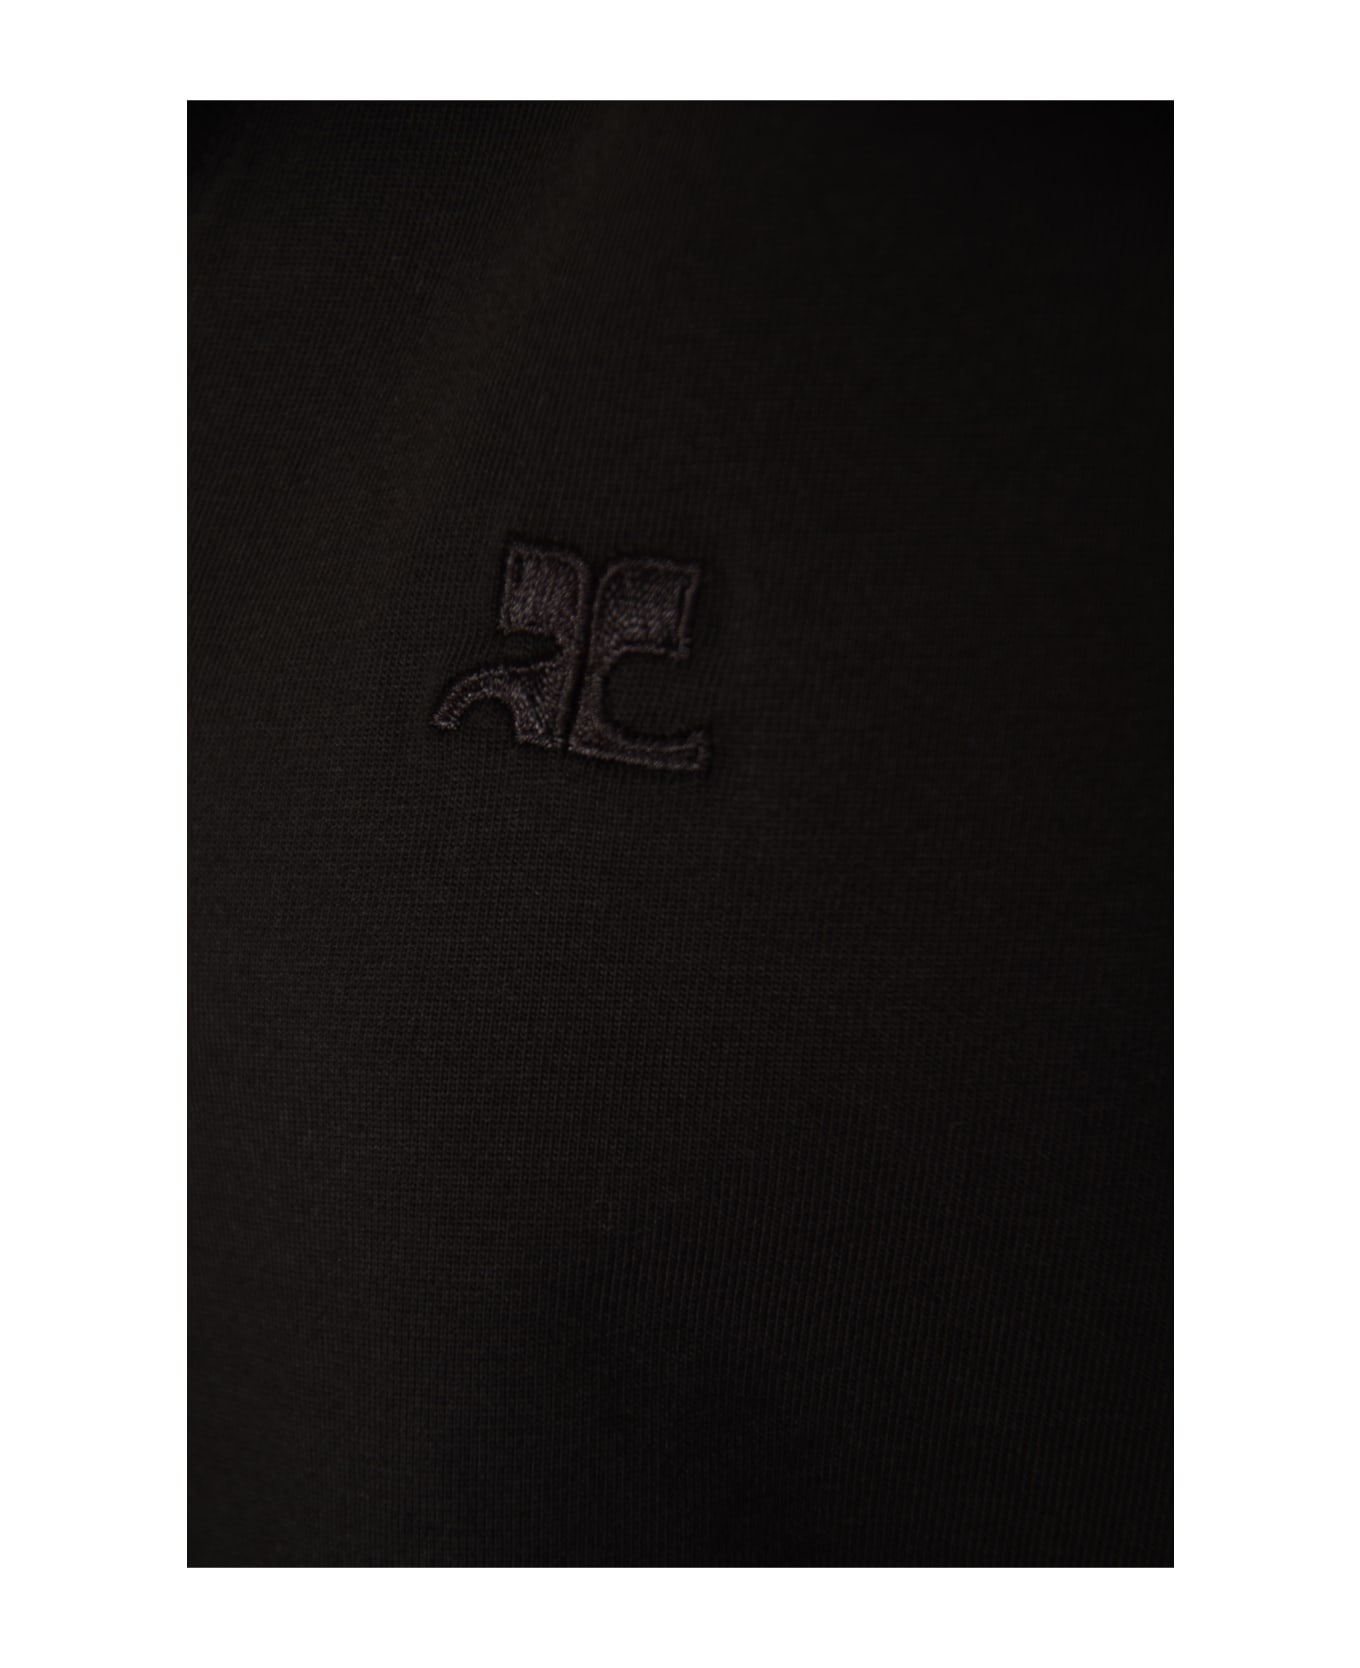 Courrèges V-neck Chest Logo T-shirt - Black Tシャツ